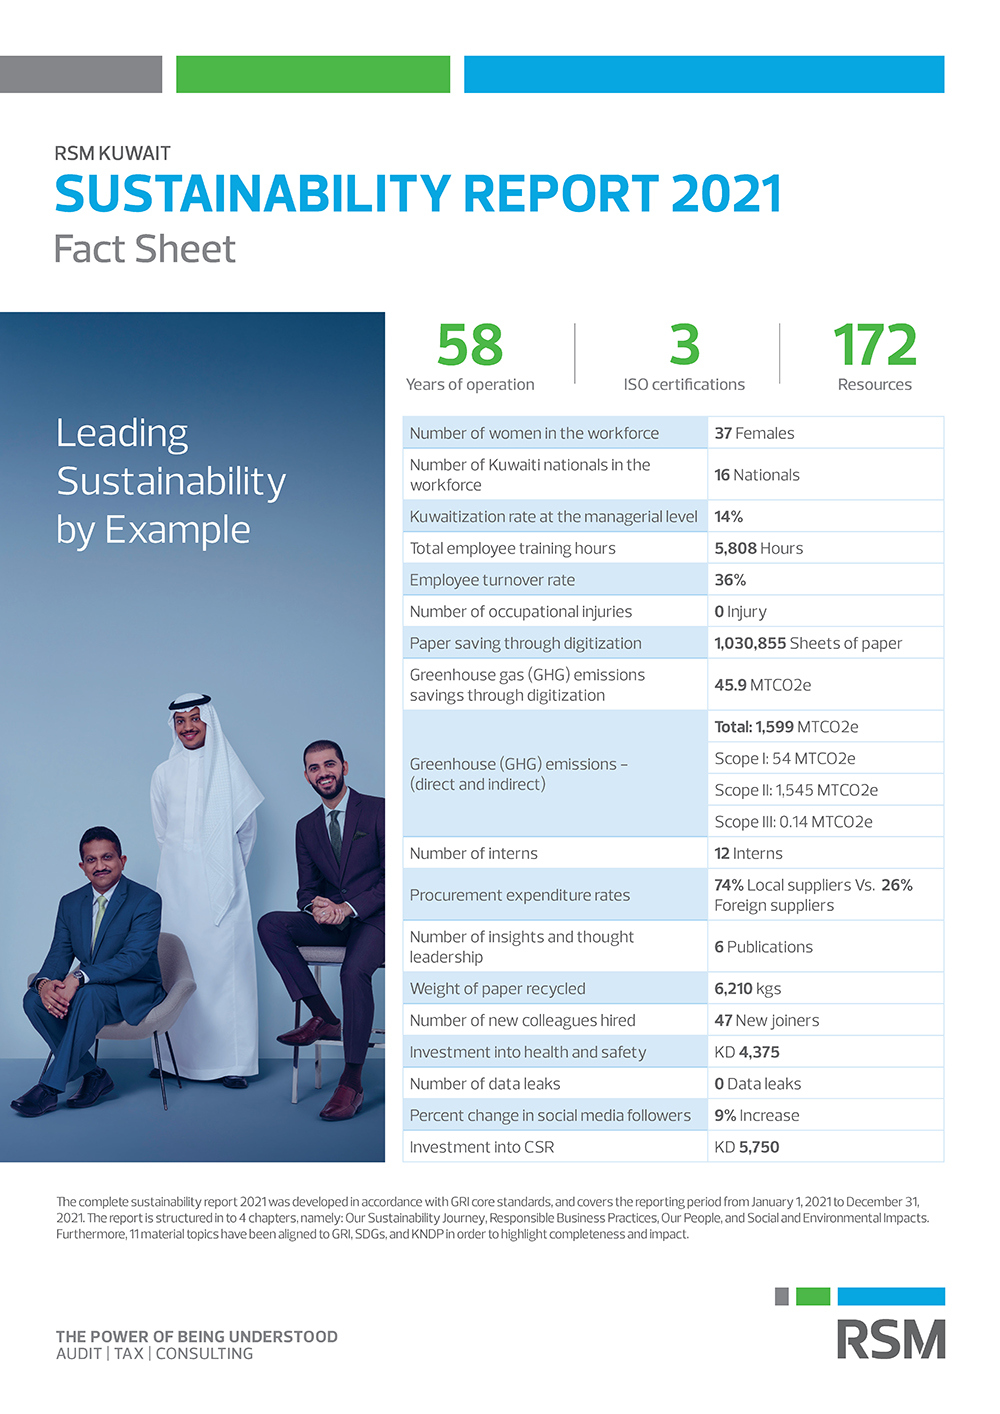 sustainability_report_2021_-_fact_sheet_rsmkw.jpg